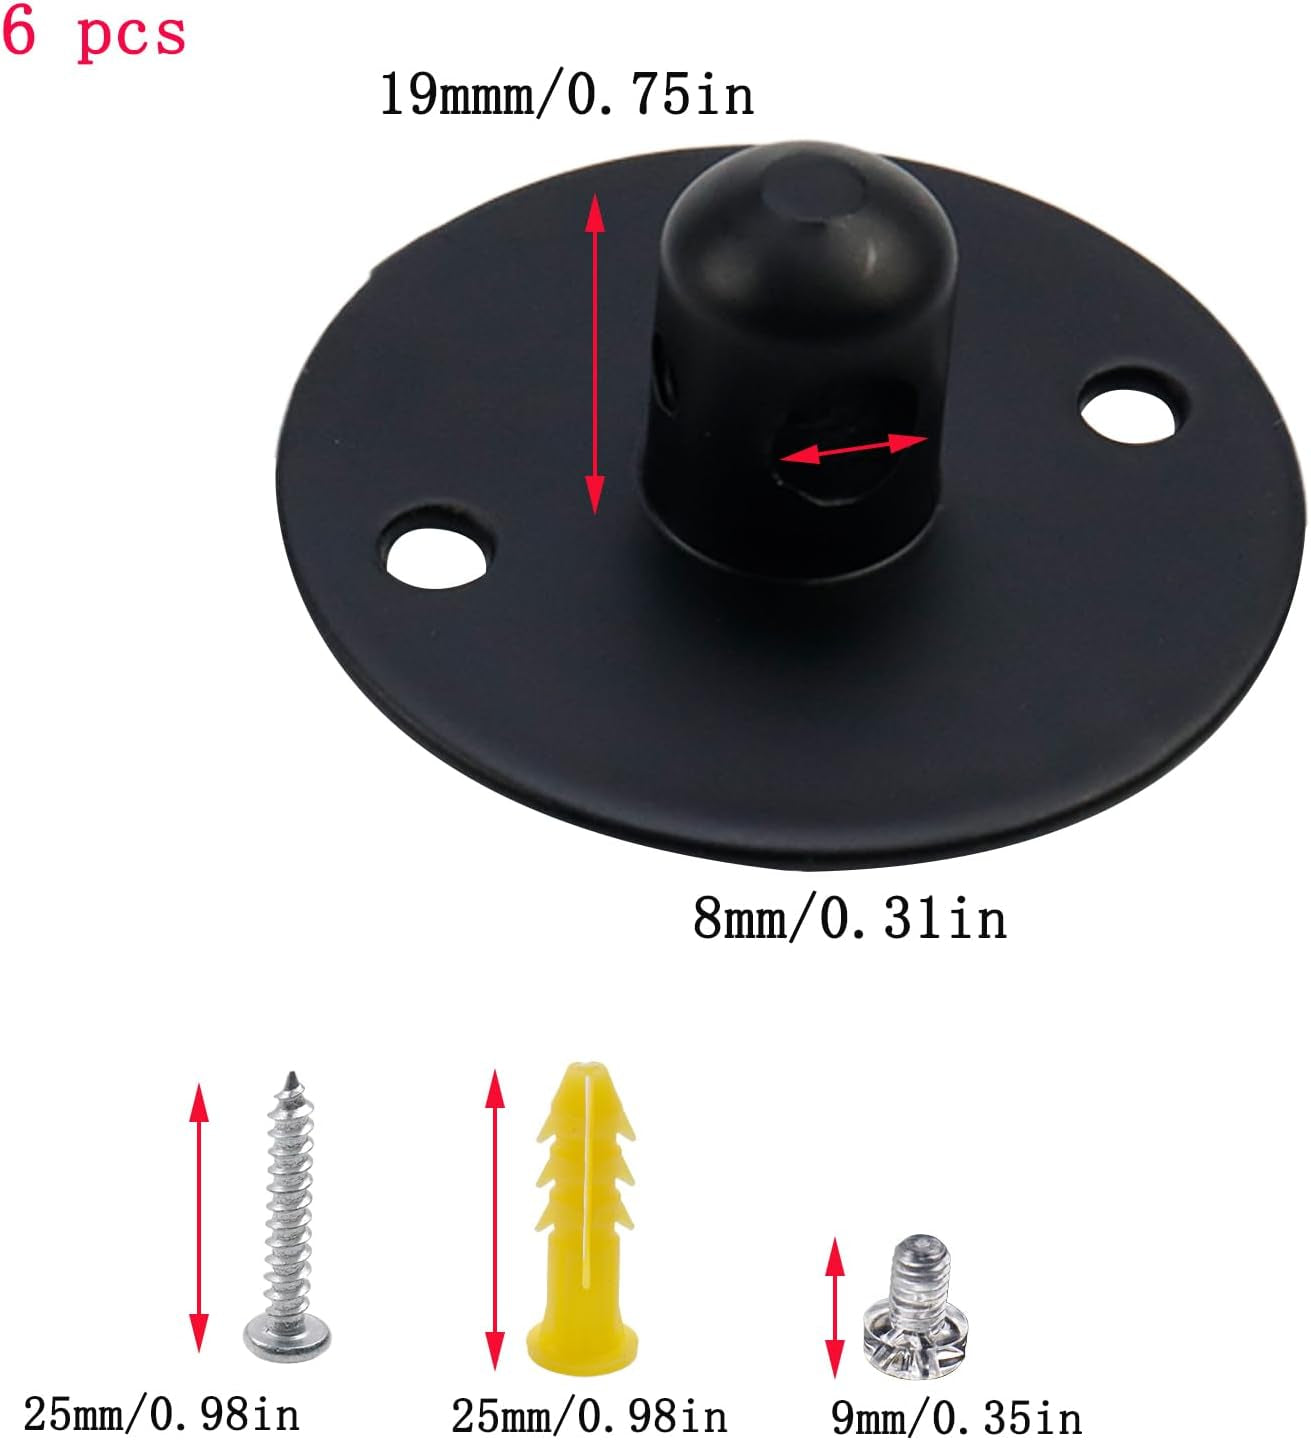 Antrader 6Pcs Swag Hooks for Ceiling Hanging Swag Lamp Hooks Modern Swag Hooks for String Light Pendant Cable Lights (Black)